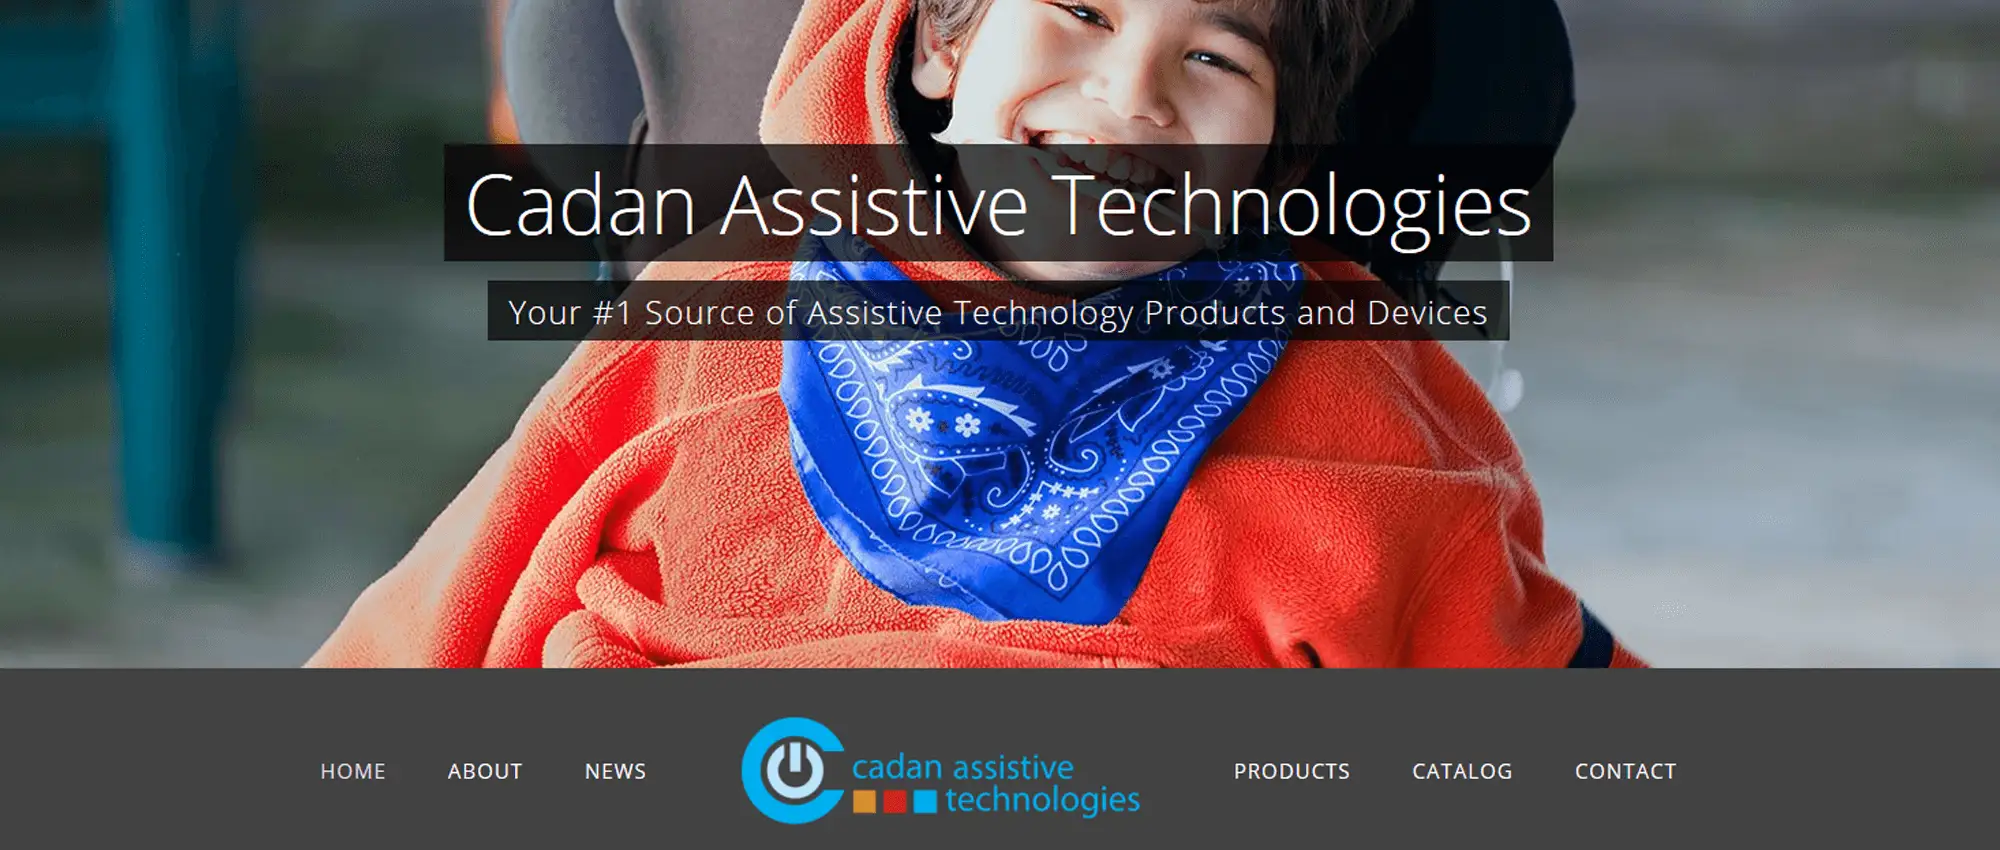 Cadan Assistive Technologies